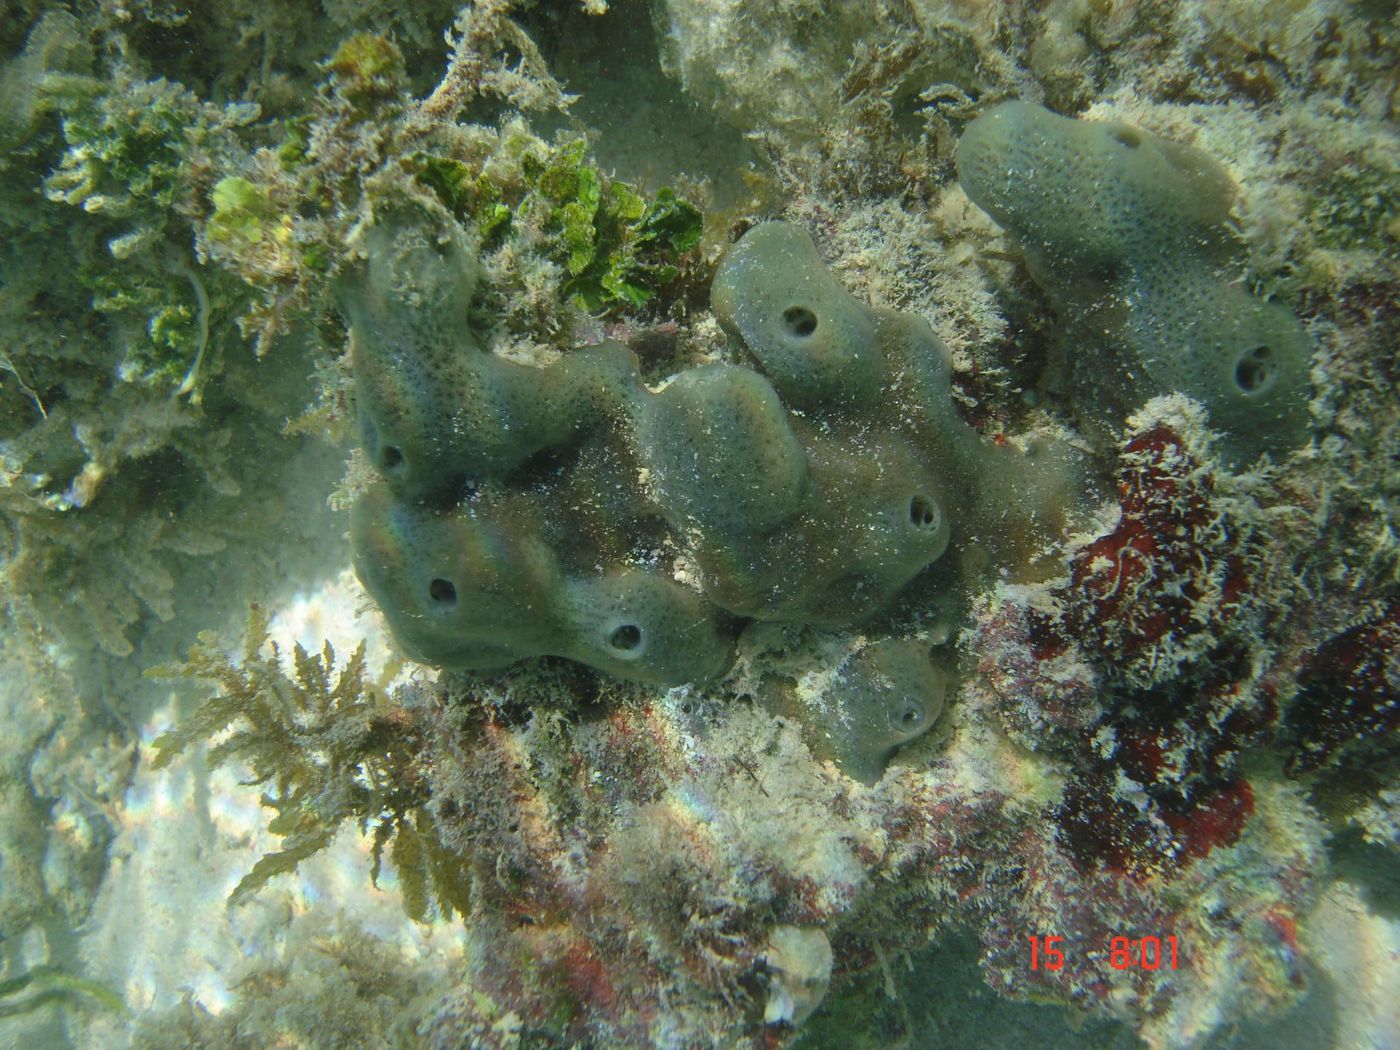 This is an image of the adult sponge Amphimedon queenslandica. / Credit: The University of Queensland